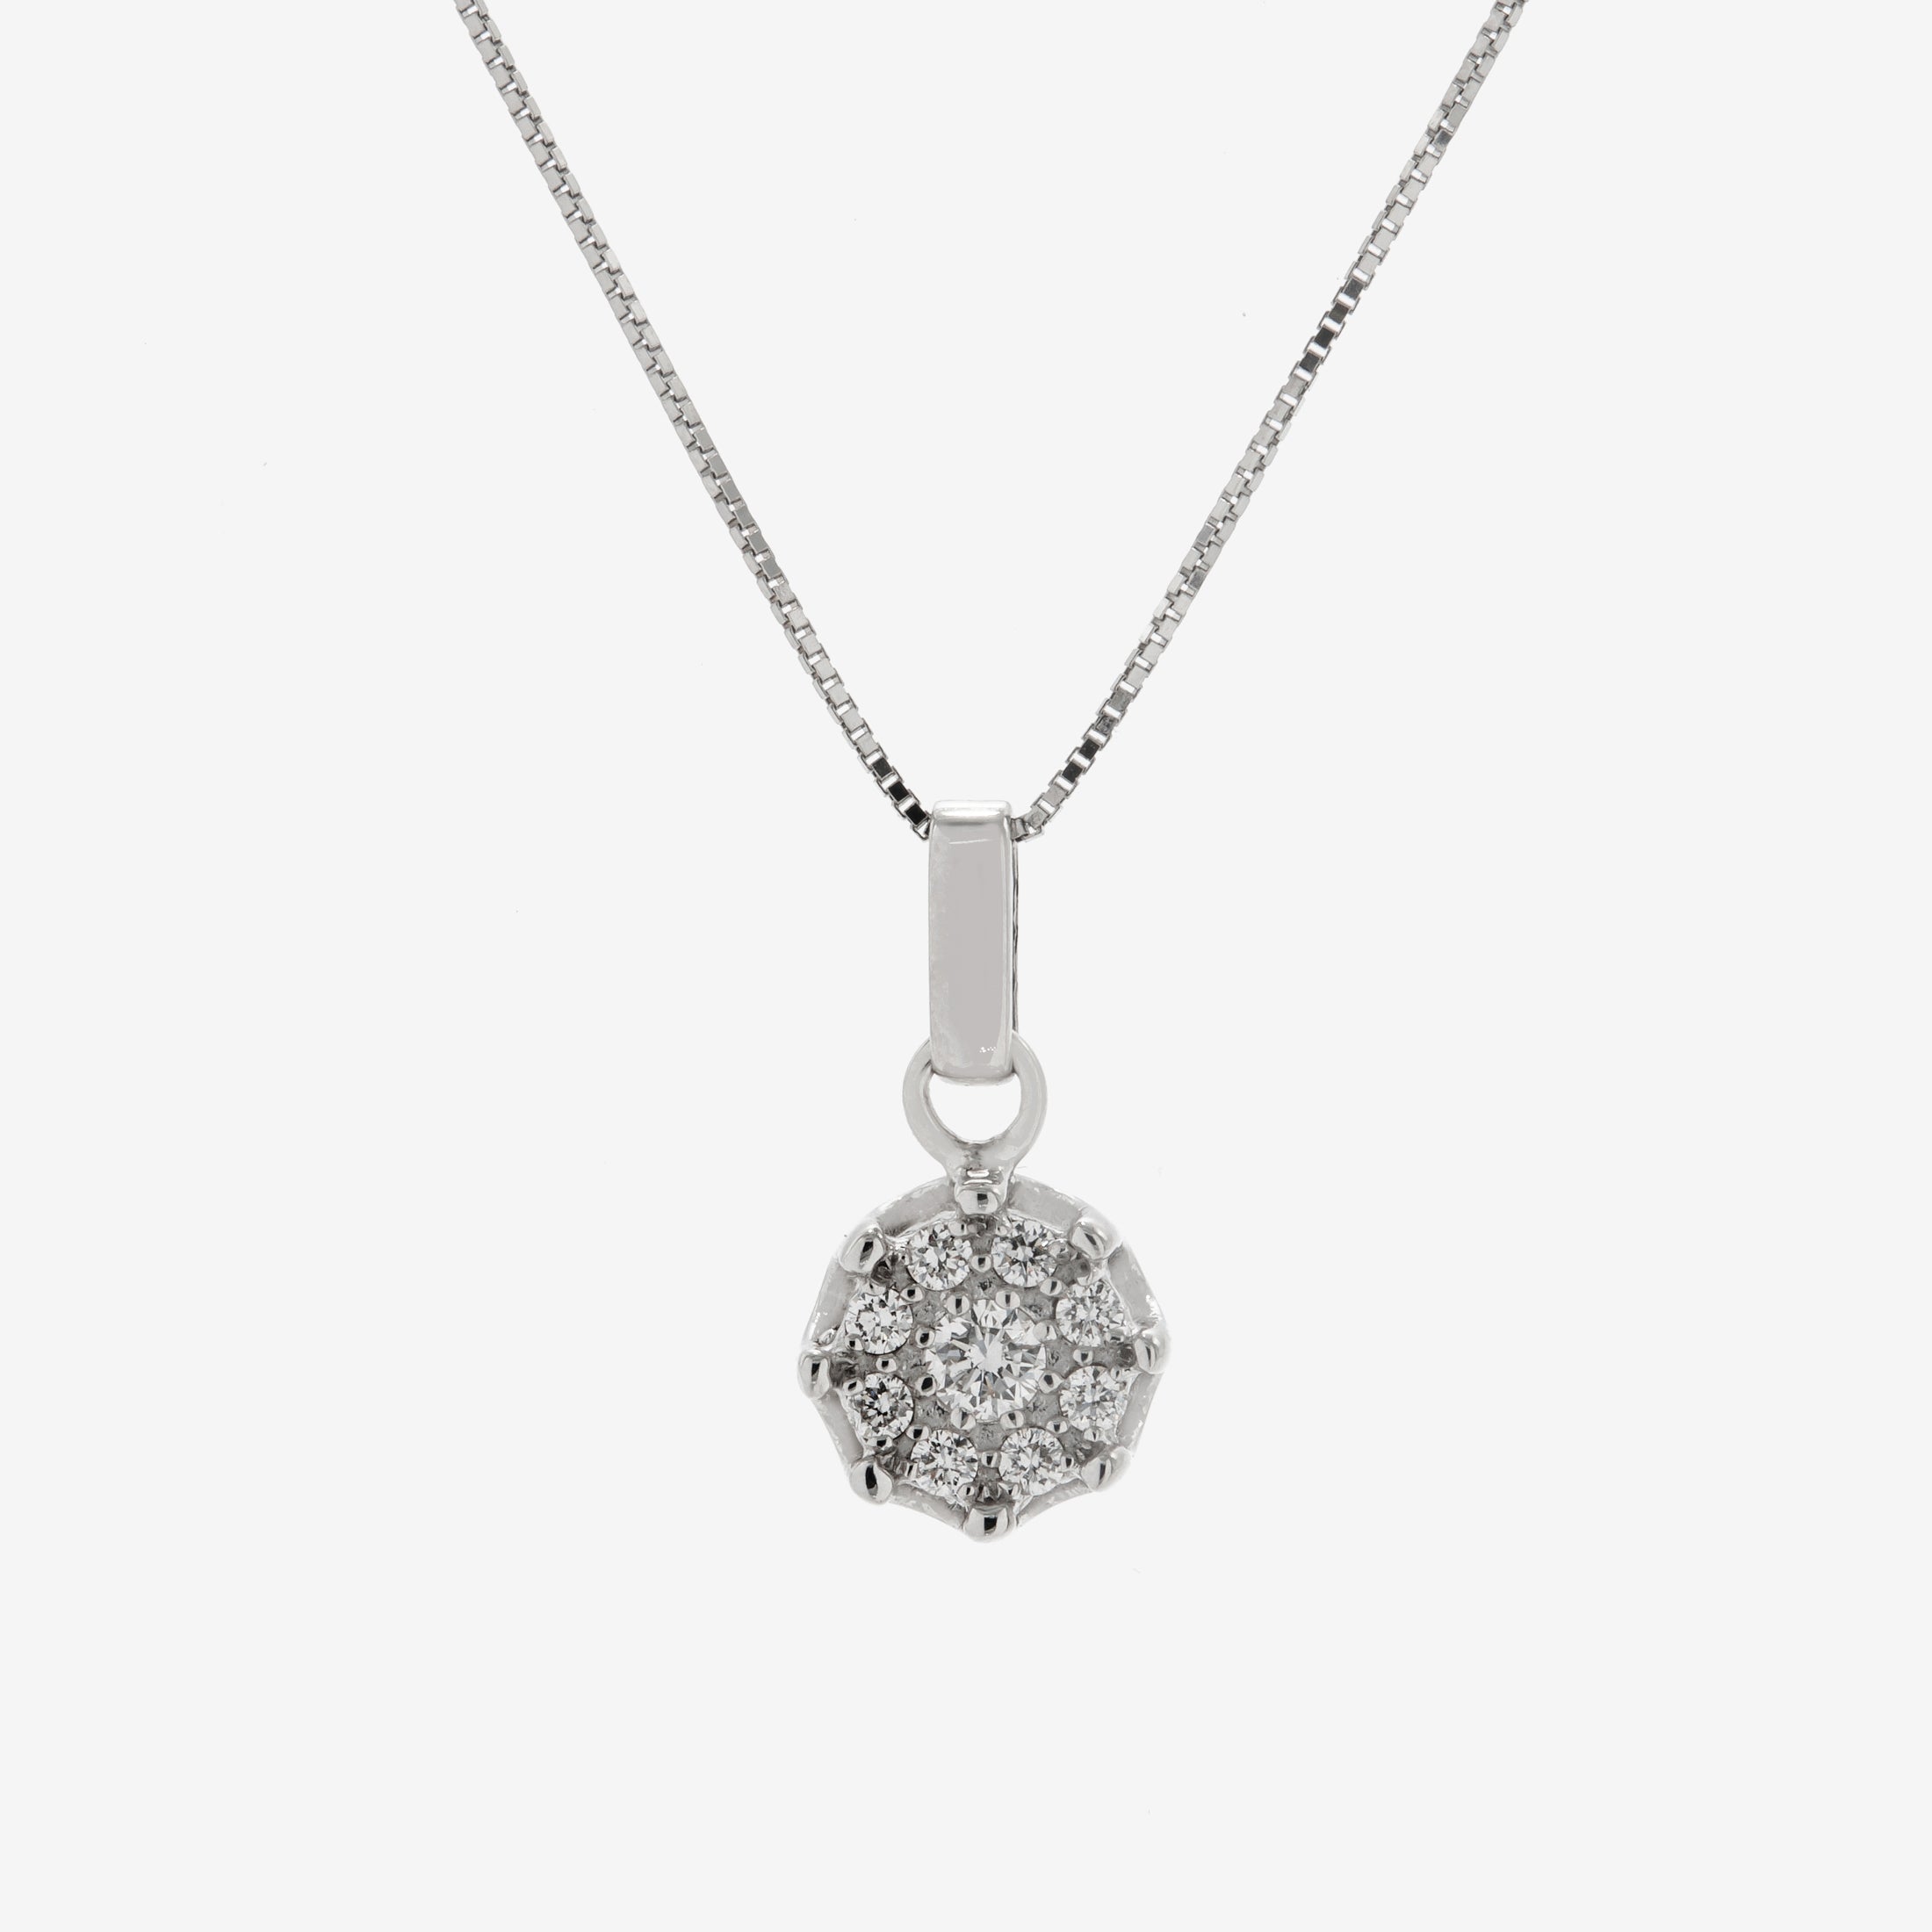 Prince pendant with diamonds